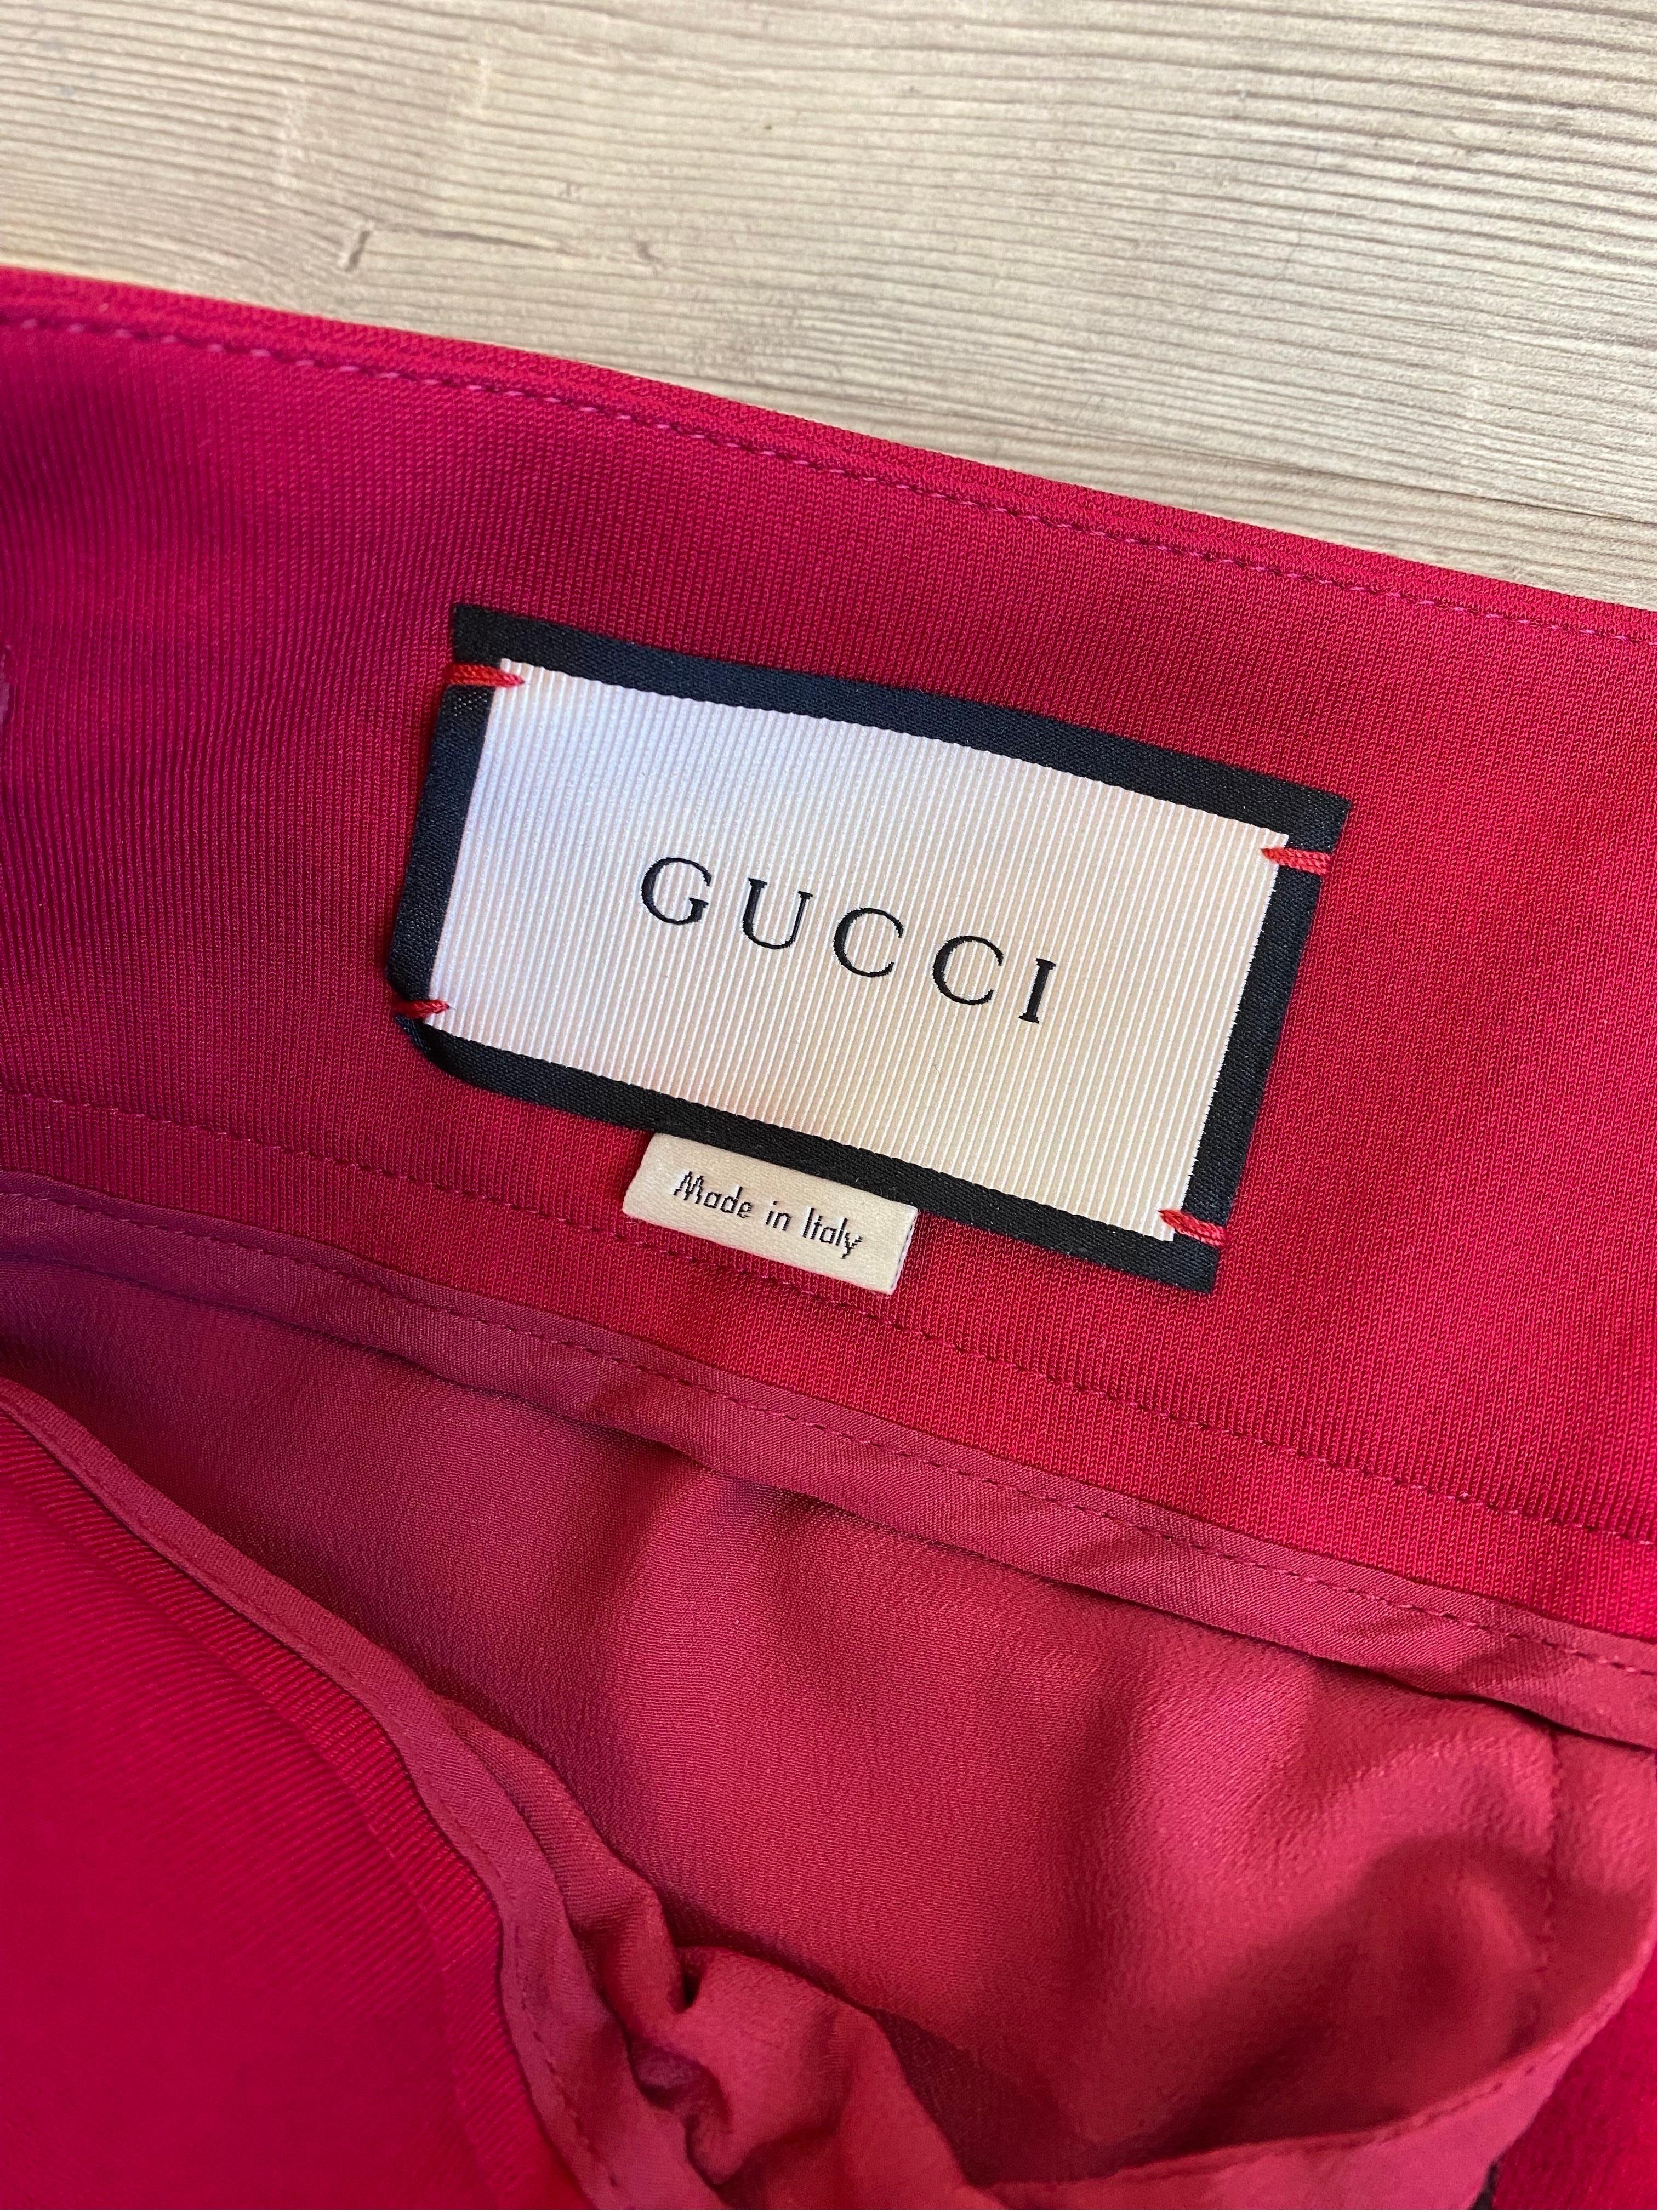 Gucci 2016 GG fuchsia Pants For Sale 4